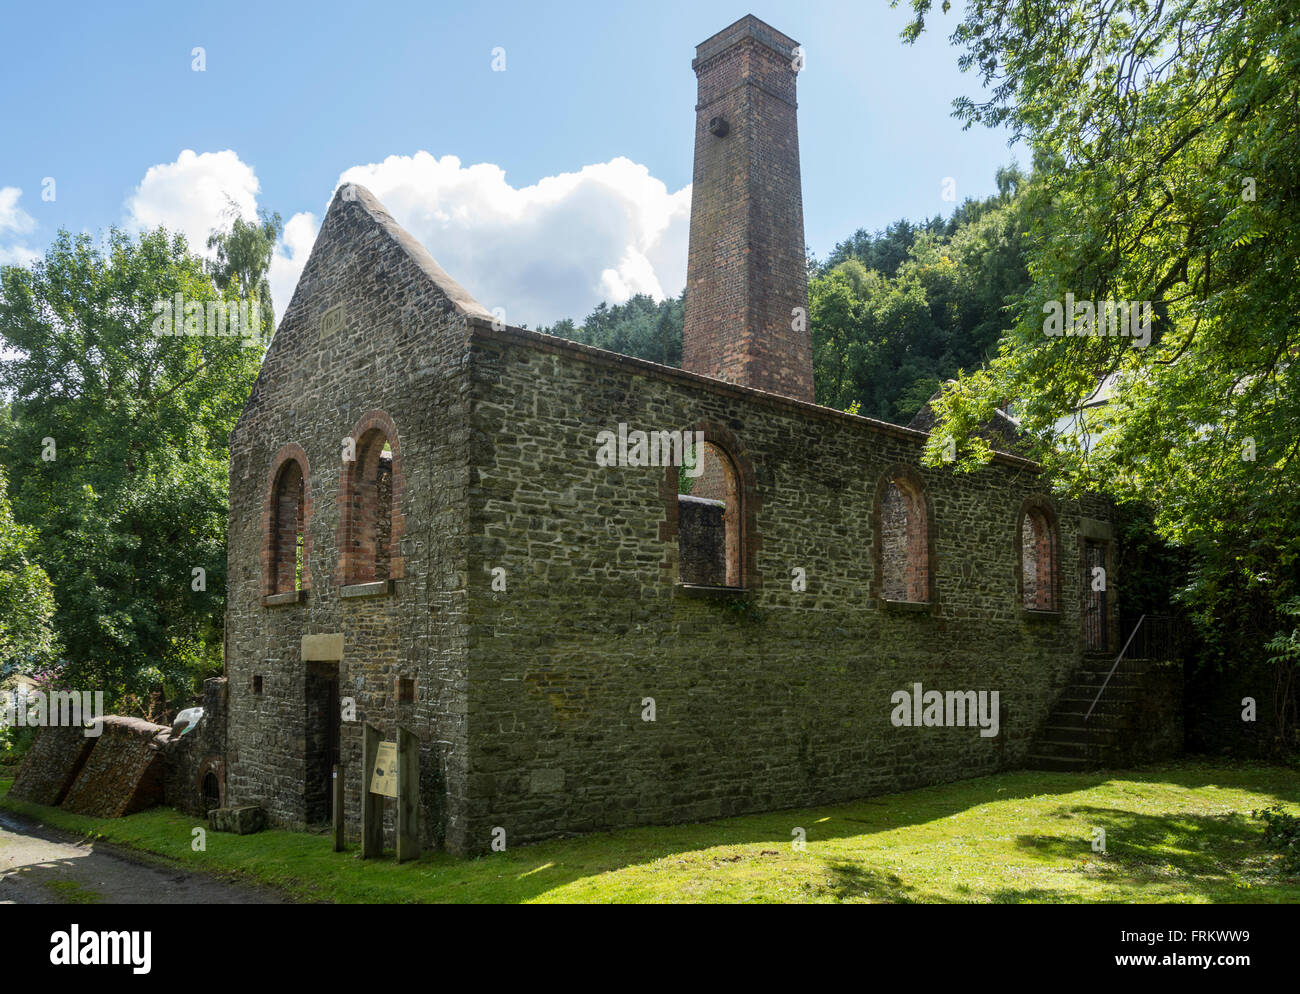 The Compressor House at the Snailbeach Lead Mine, Stiperstones ridge, Shropshire, England, UK. Stock Photo